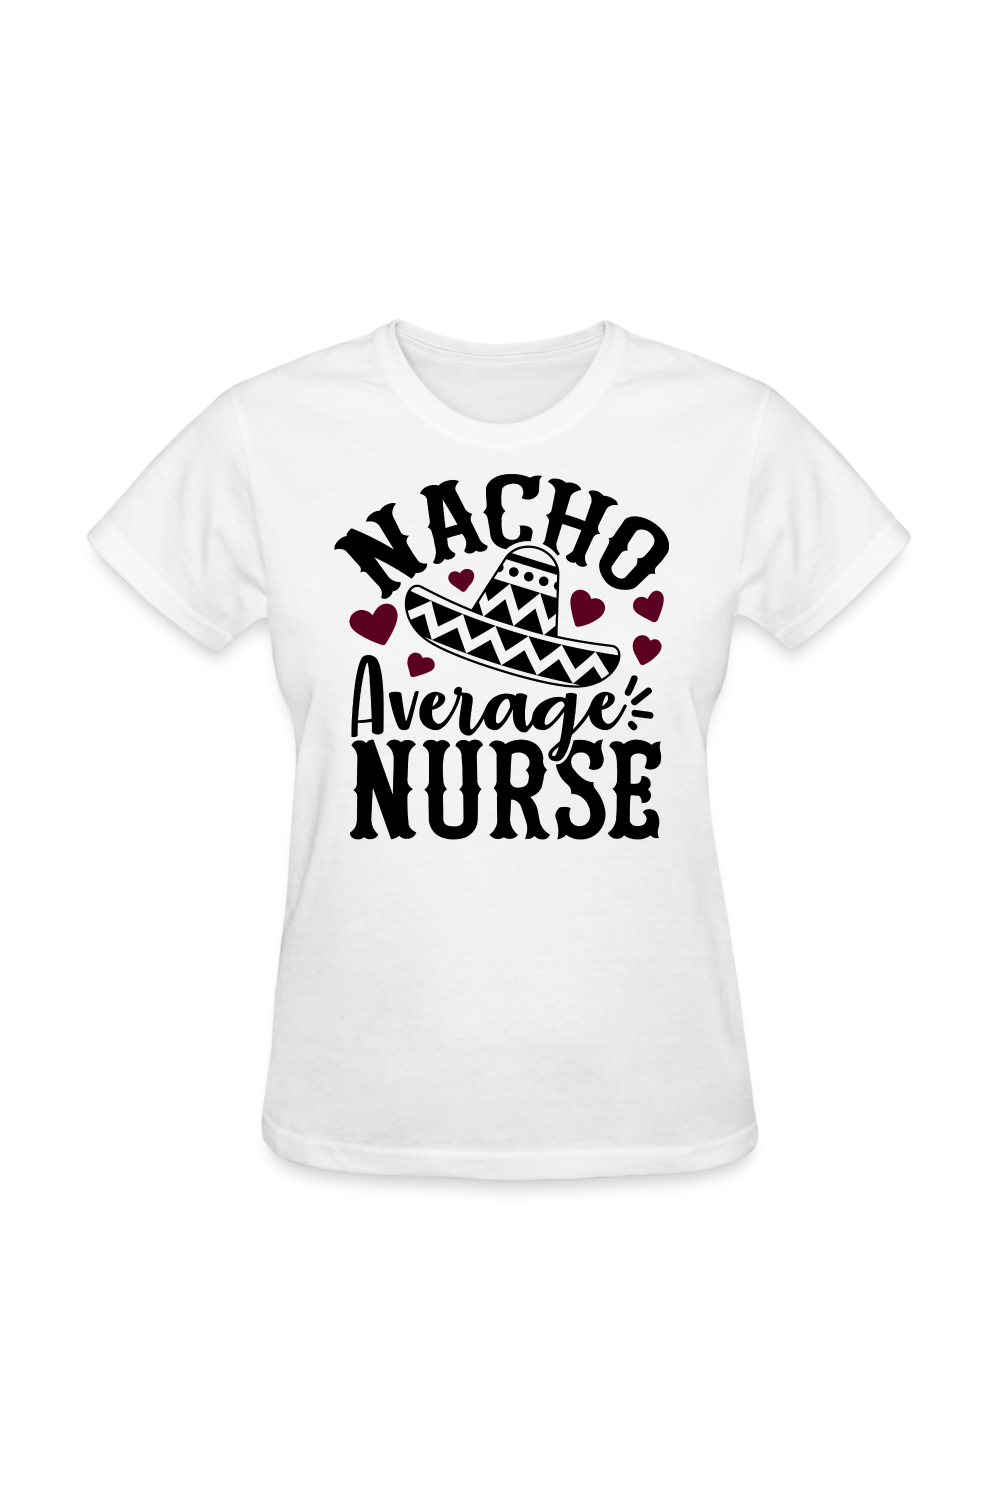 Nacho Average Nurse Women's Nurse T-Shirt - white